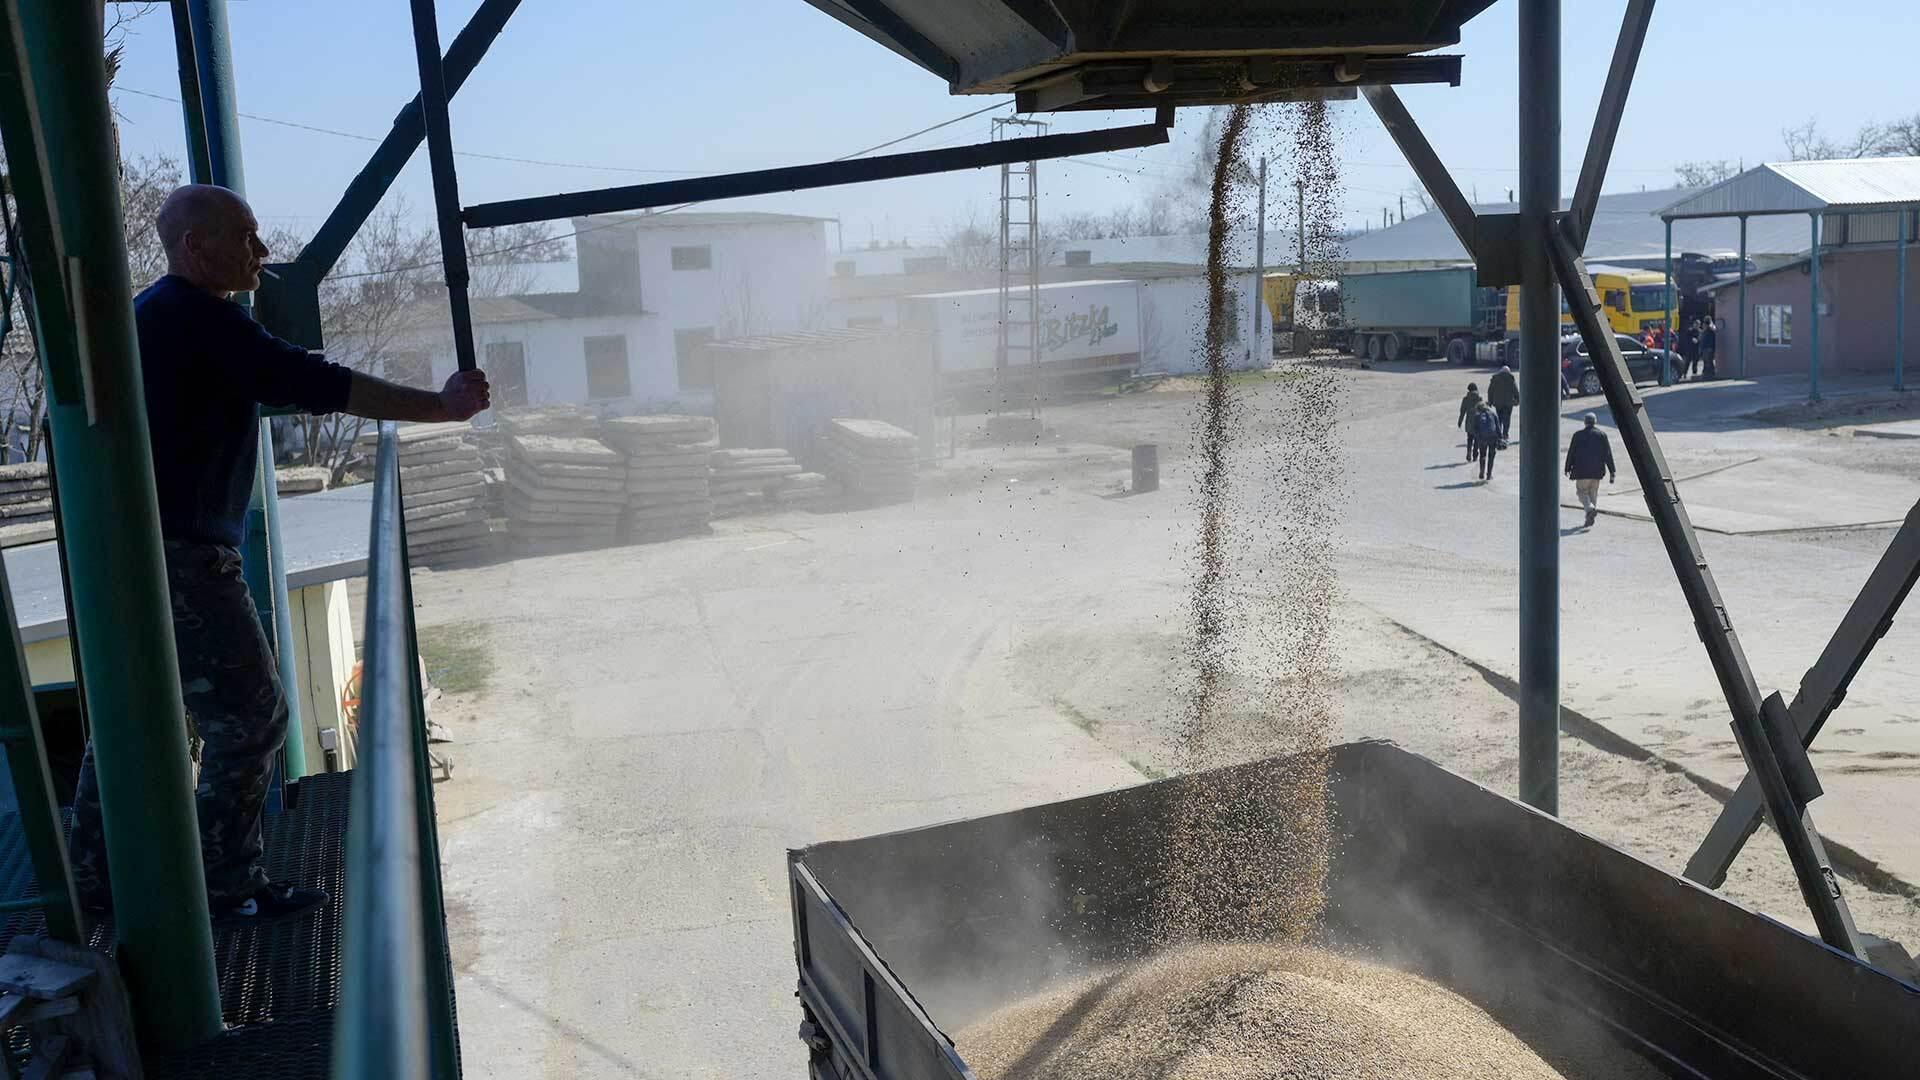 A worker fills a truck with wheat in a village in southwestern Ukraine.